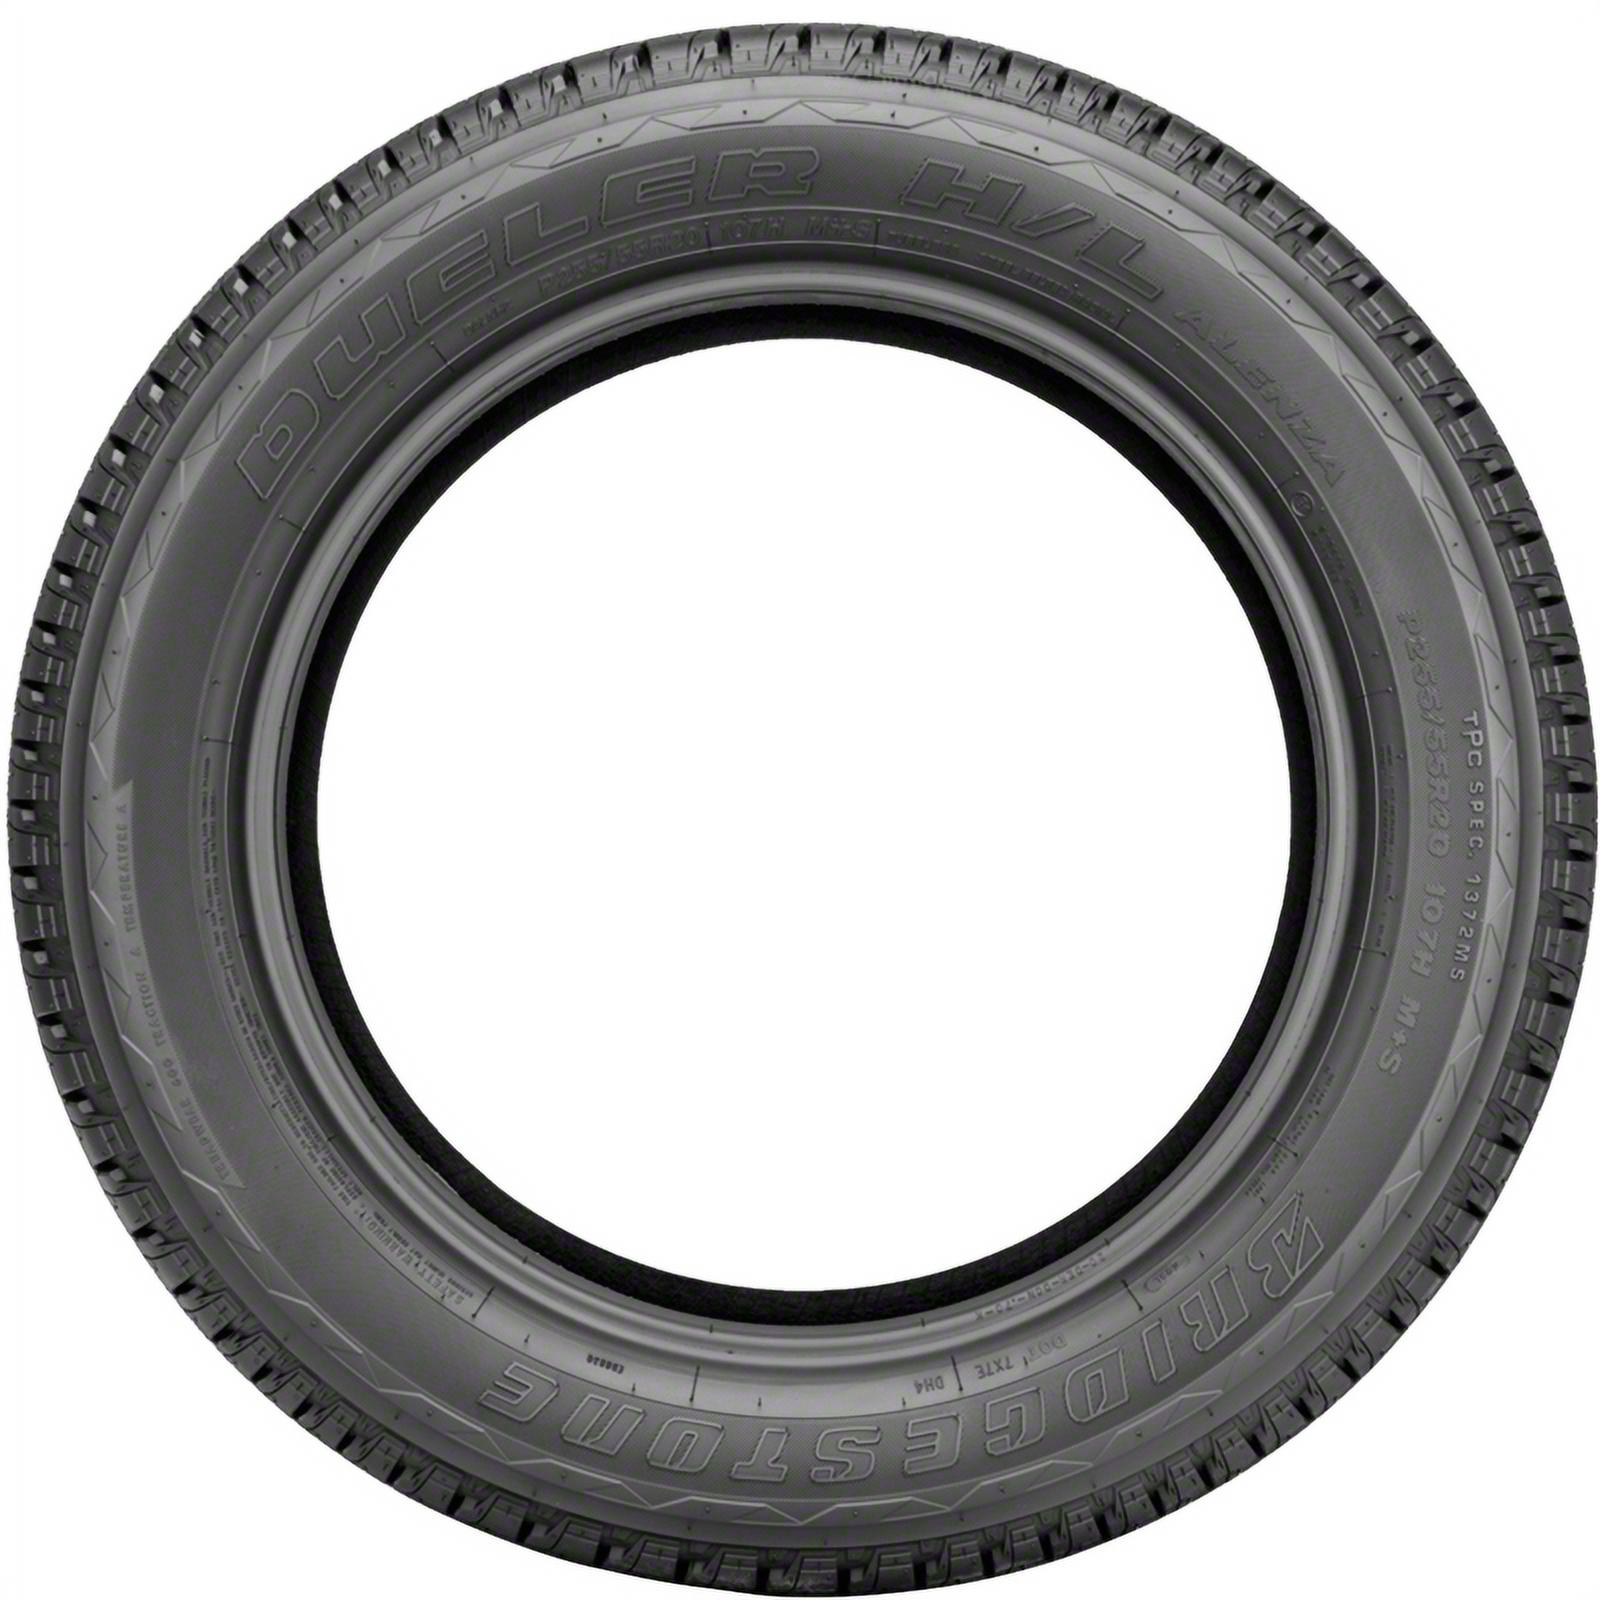 Bridgestone Dueler H/L Alenza 275/55R20 111 S Tire - image 2 of 5